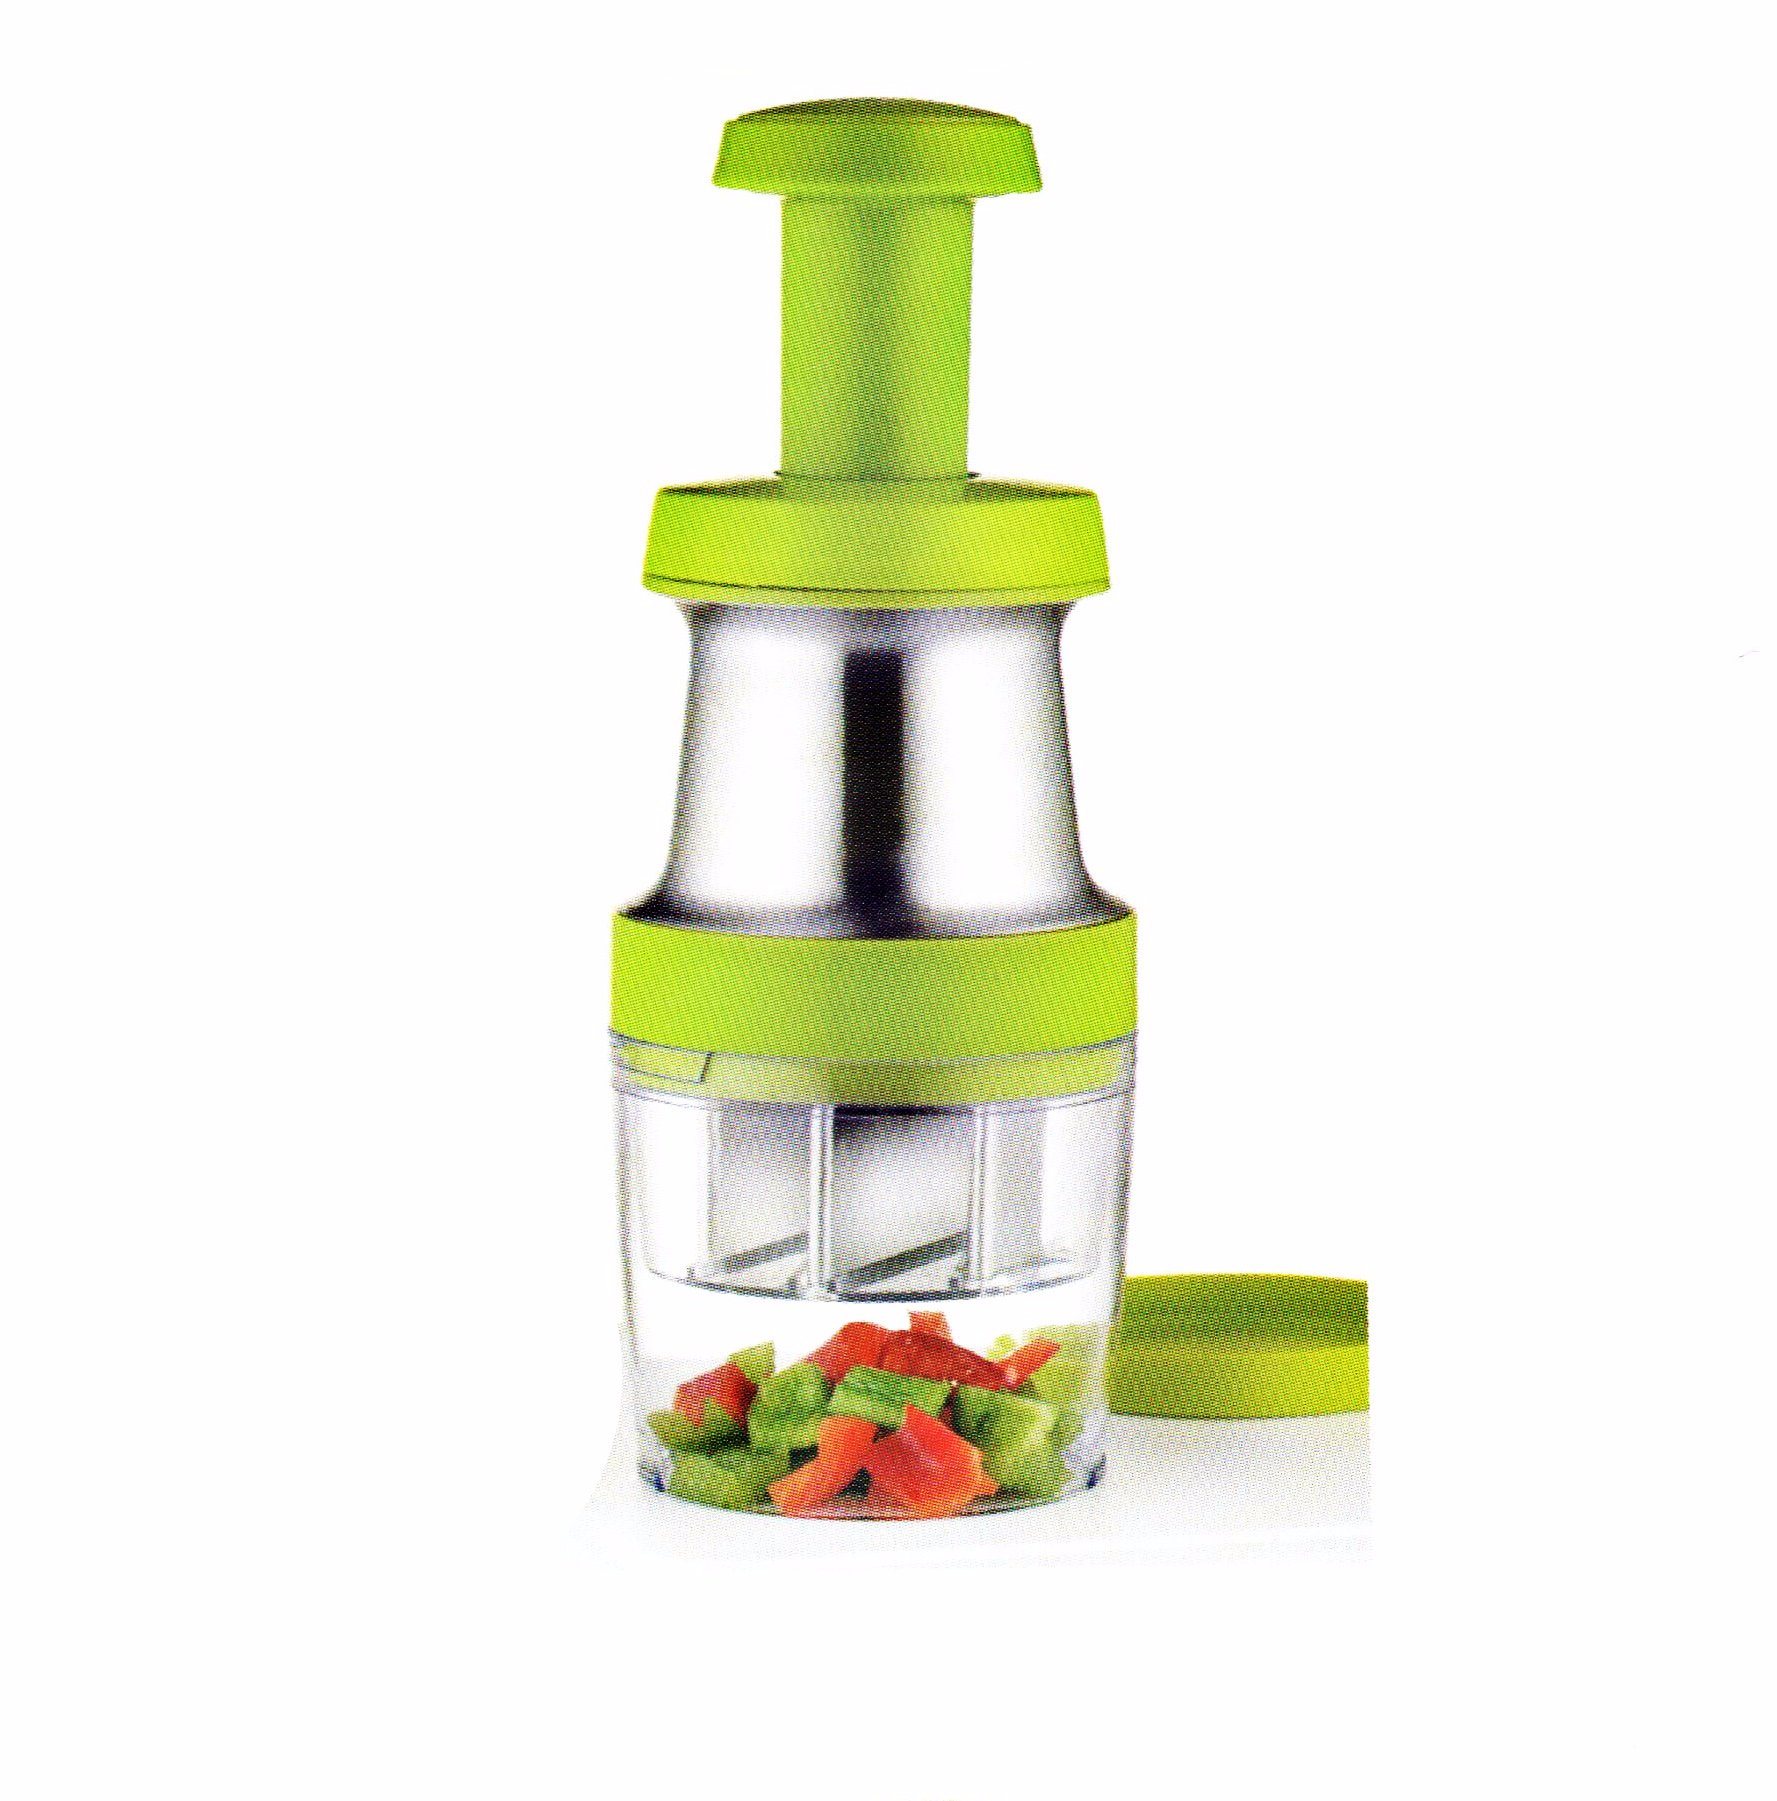 Plastic Food Processor Vegetable Food Chopper Cutting Machine Cg033